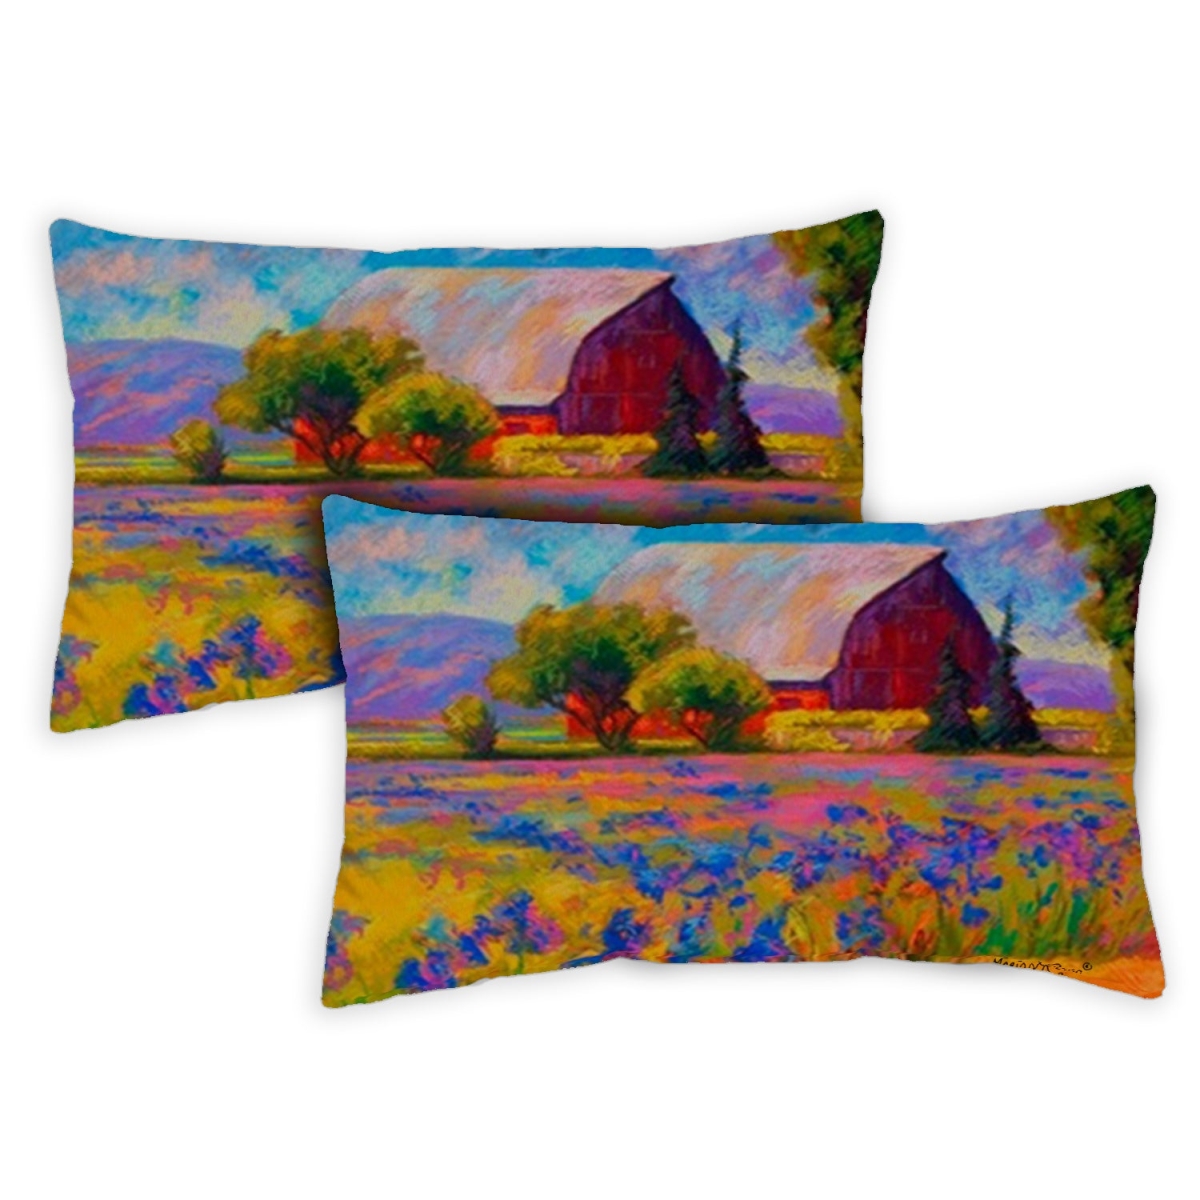 Toland Home Garden 771289 12 x 19 in. Lavender Farm Indoor & Outdoor Pillow Case - Set of 2